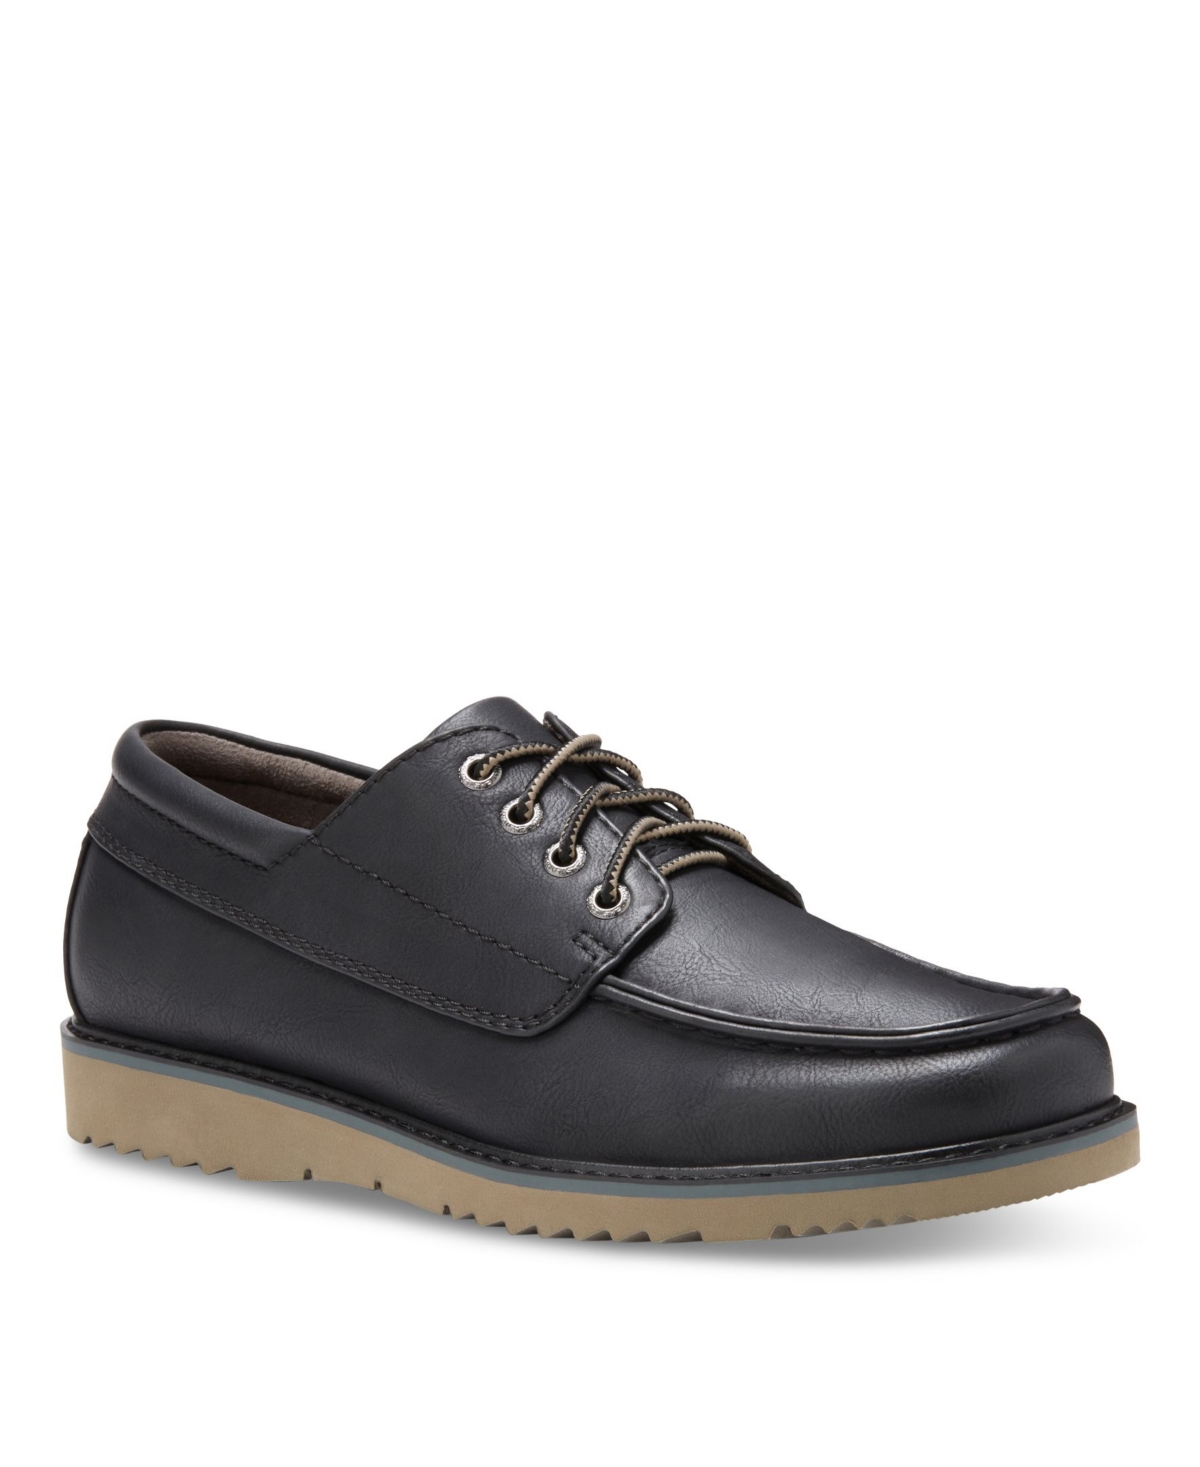 Men's Jed Moc Toe Oxford Shoes - Brown